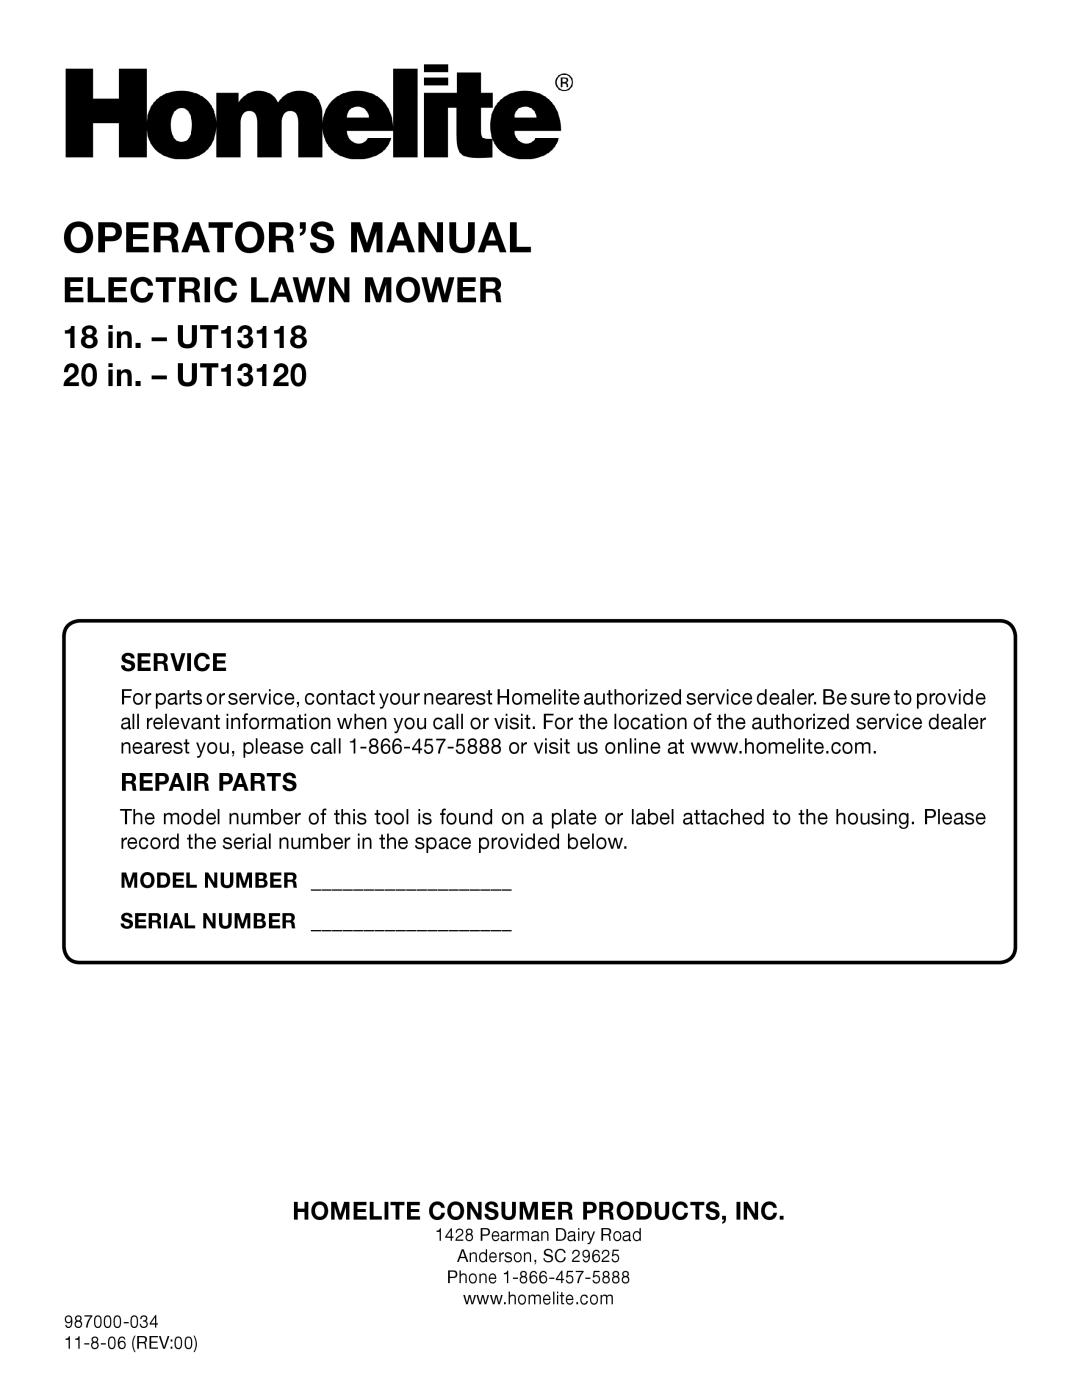 Homelite UT13118, UT13120 Service, Repair Parts, Homelite Consumer Products, Inc, Operator’S Manual, Electric Lawn Mower 